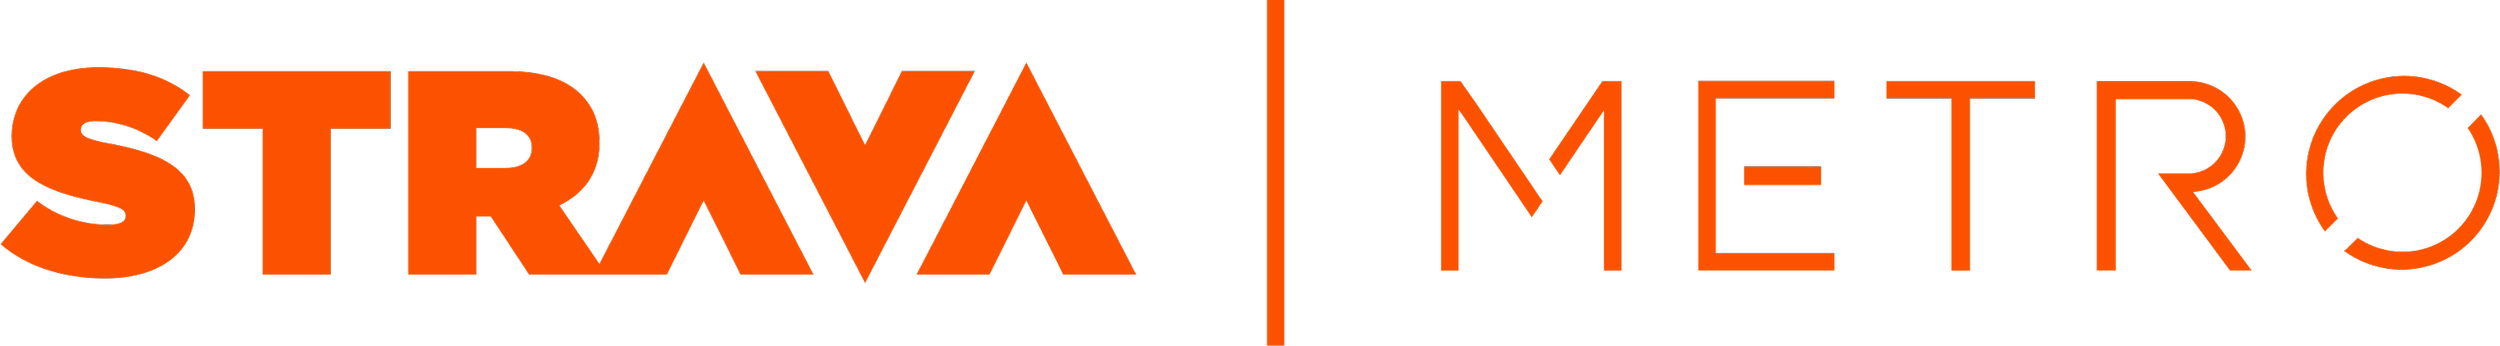 Strava-Metro-Orange-RGB.png